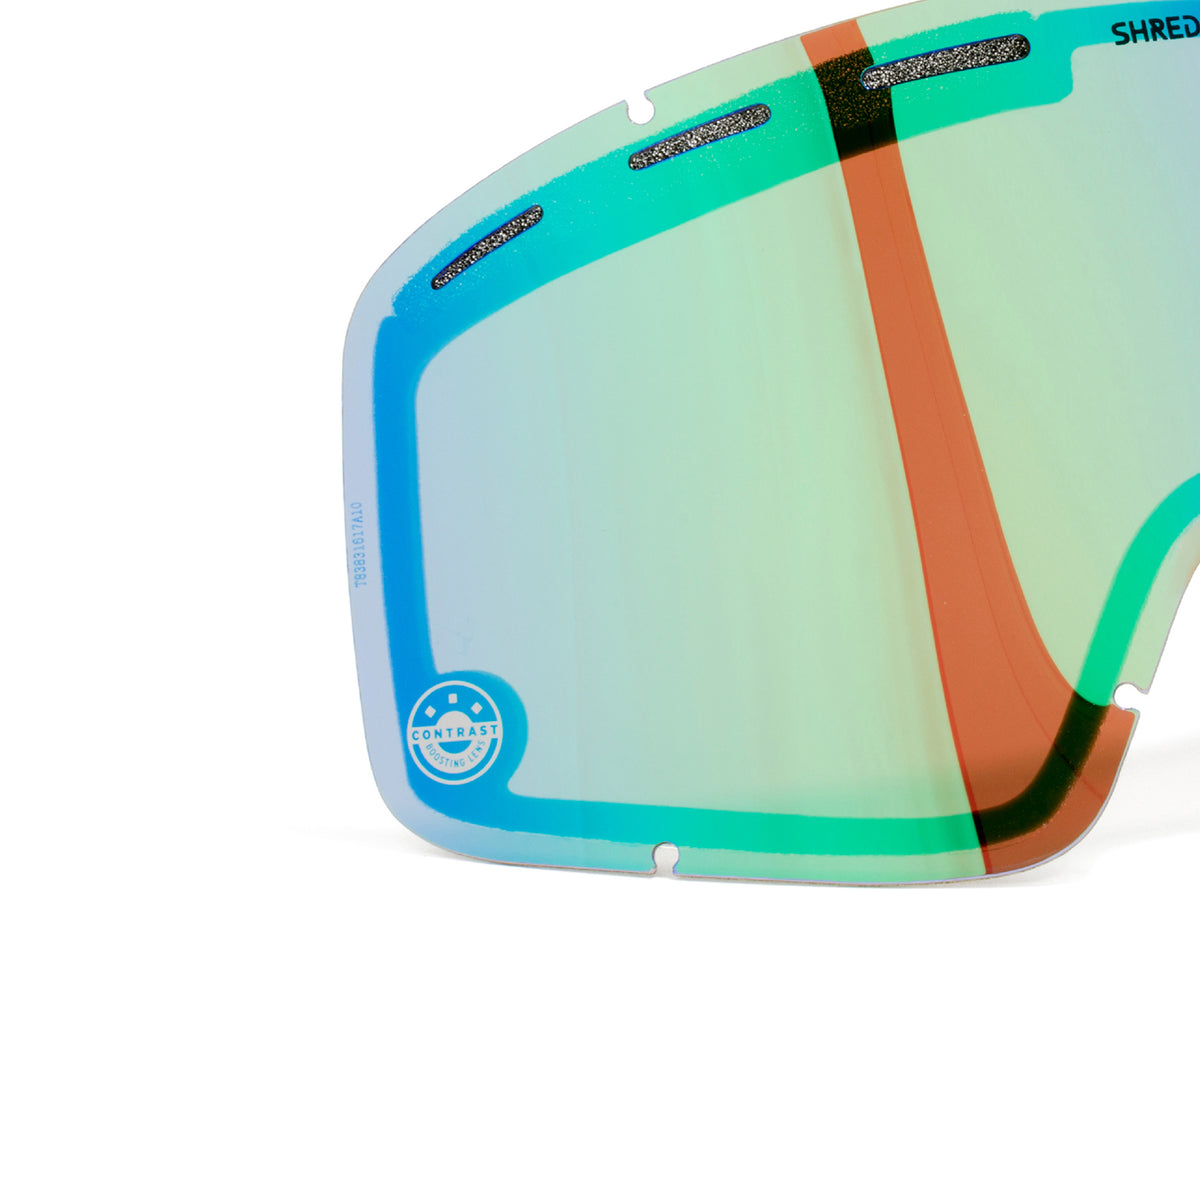 Monocle - Ski Goggles - SHRED.